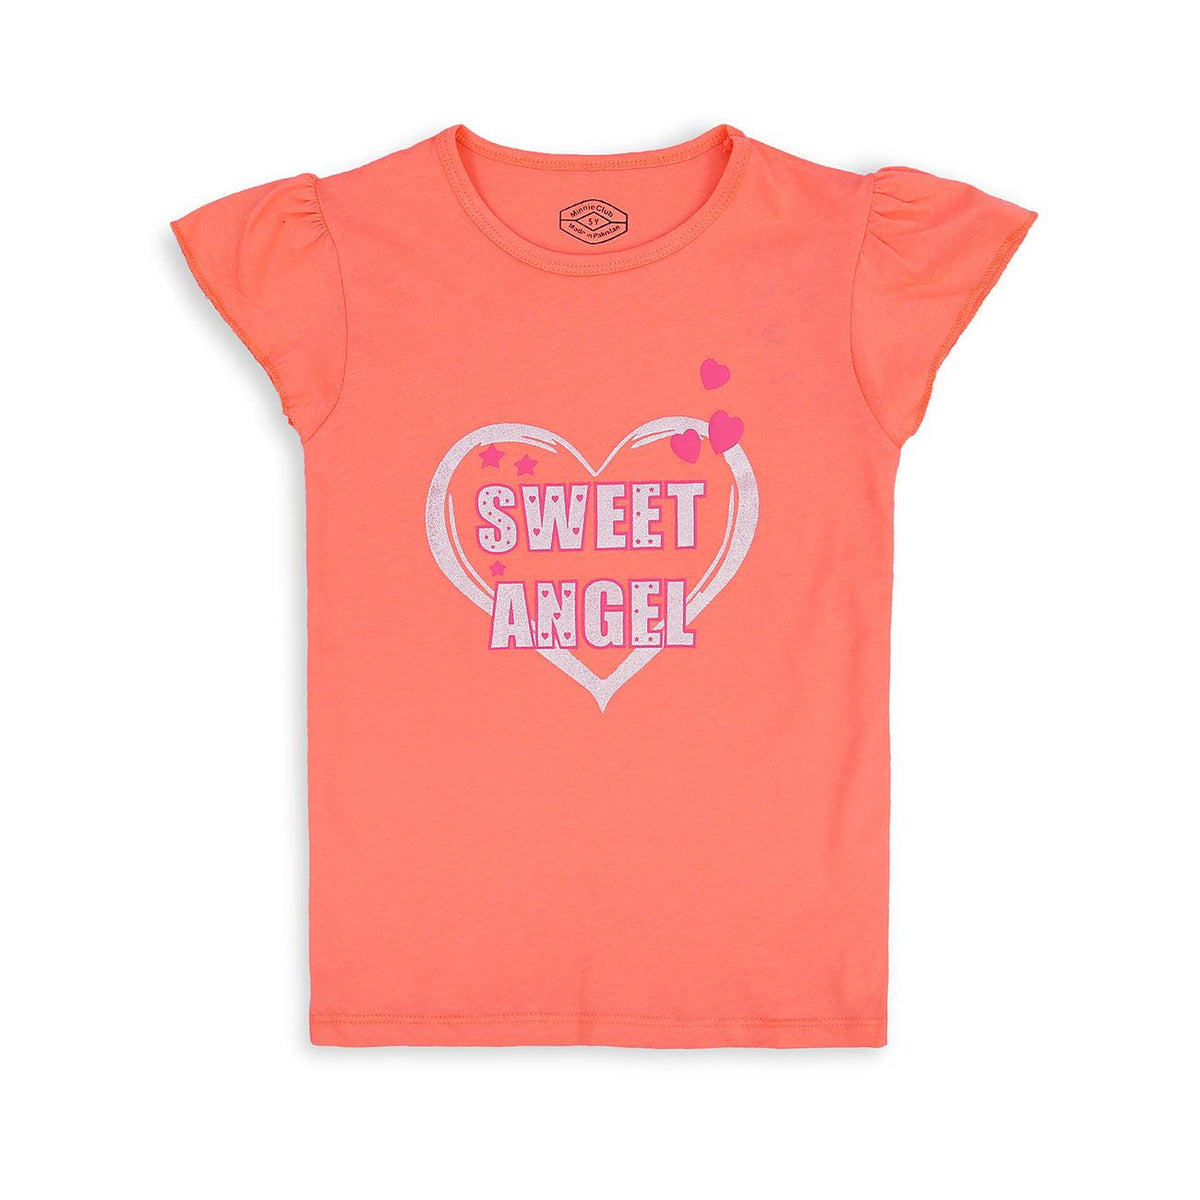 Girls Printed Soft Cotton T-Shirt 9 MONTH - 10 YRS (MI-10953) - Brands River